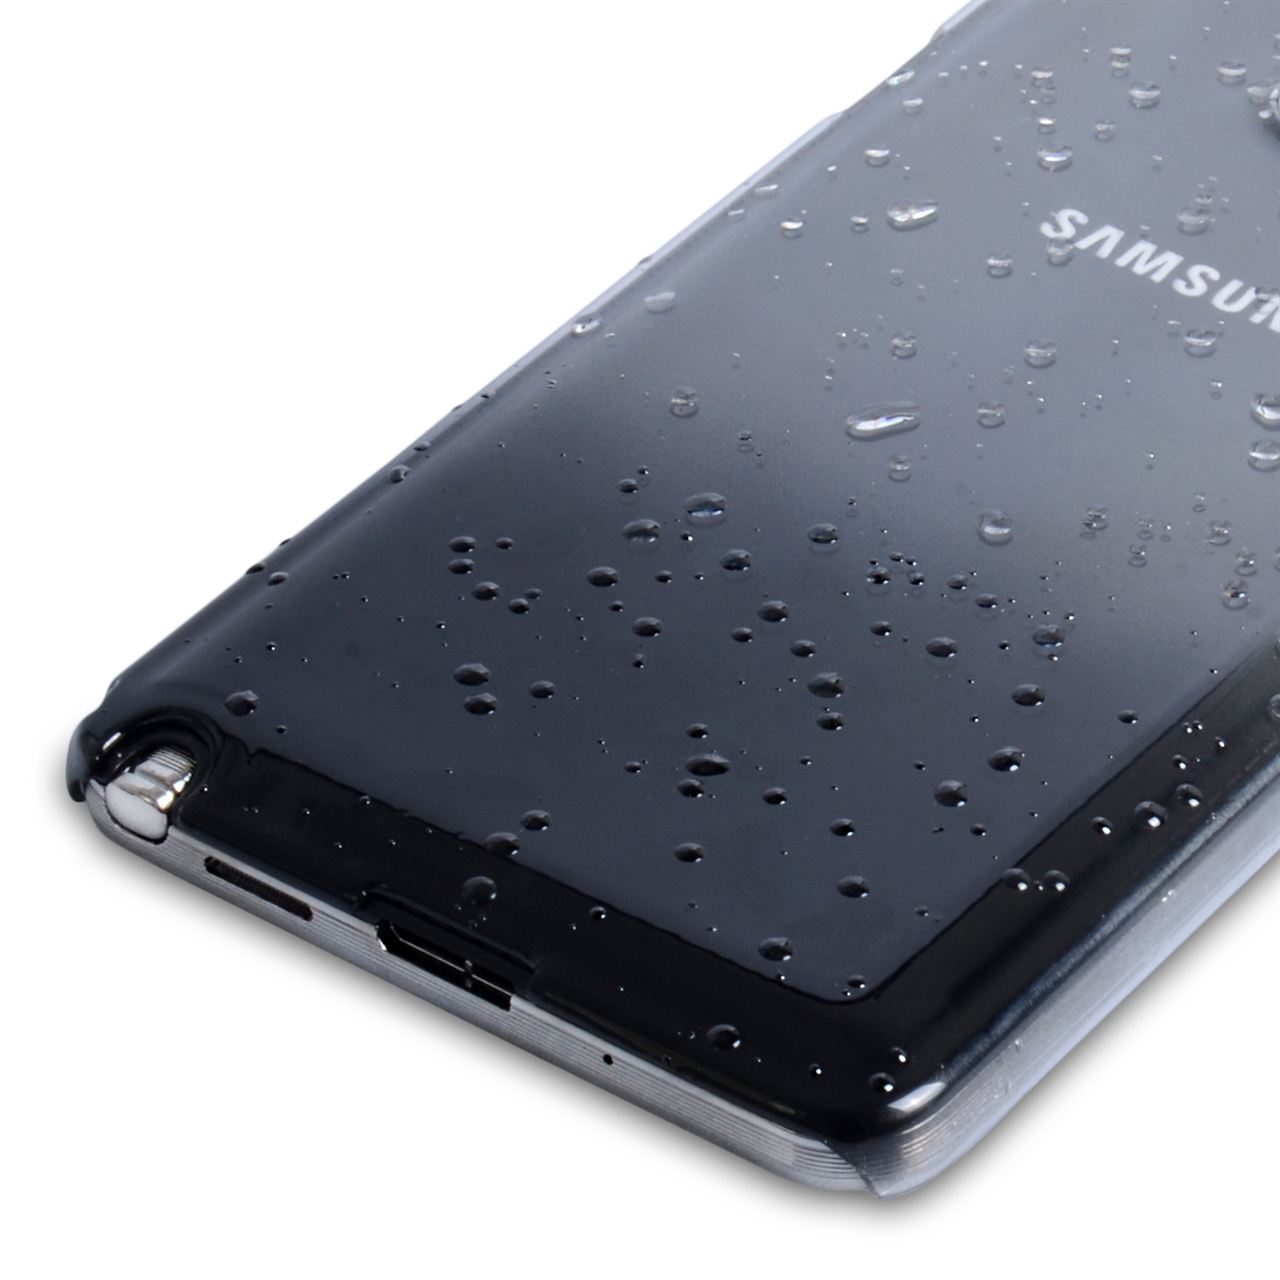 YouSave Accessories Samsung Galaxy Note 3 Waterdrop Hard Case - Black